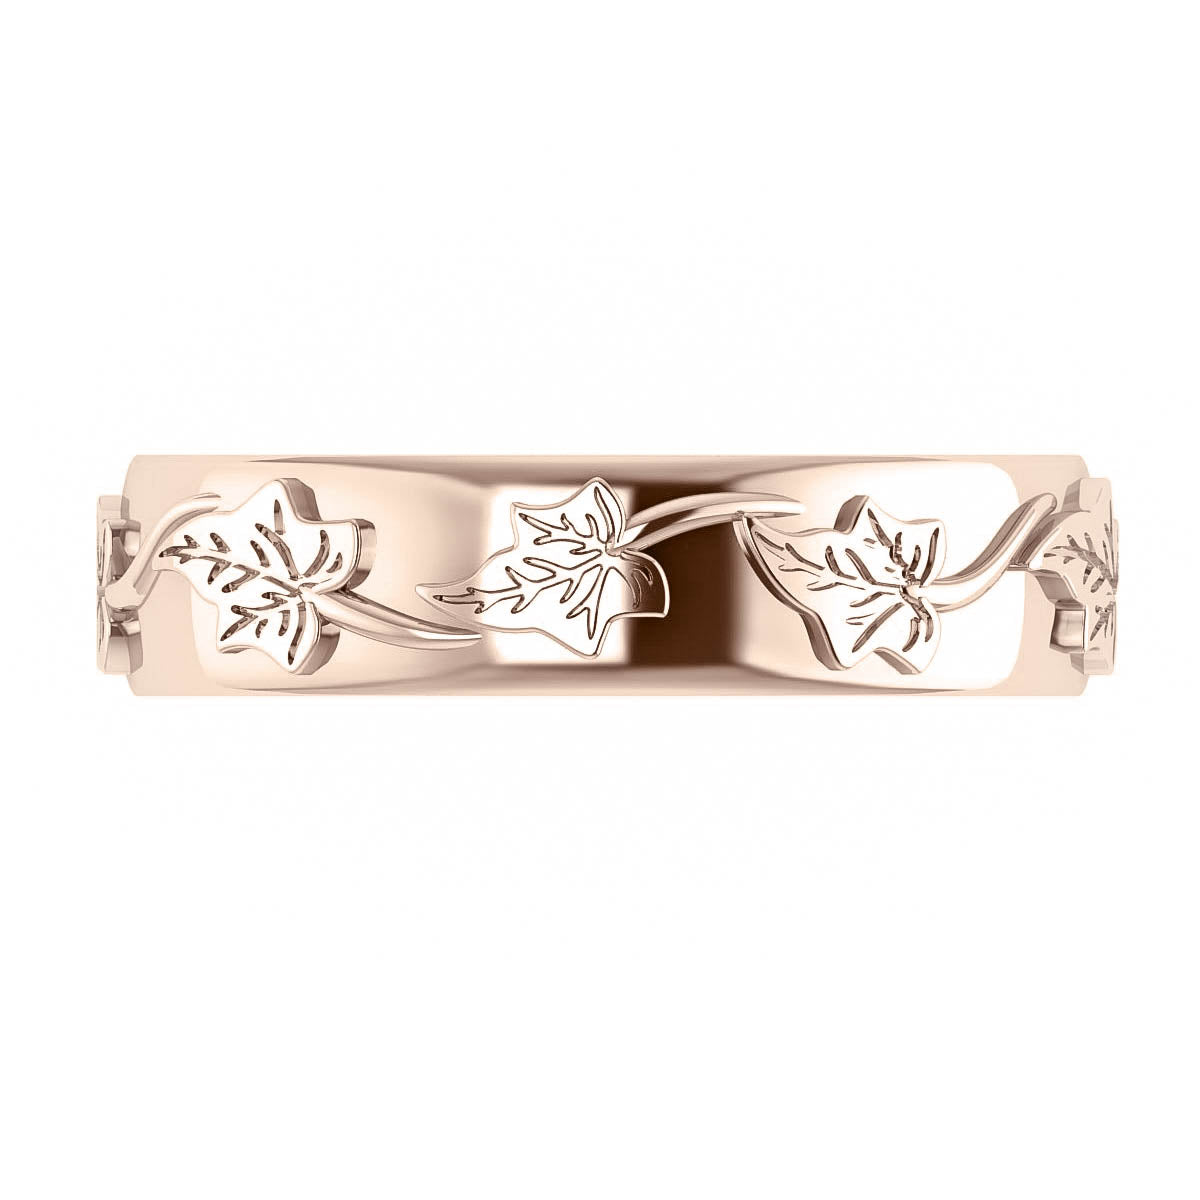 Ivy leaves pattern wedding band, comfort fit 6 mm, unisex wedding band - Eden Garden Jewelry™